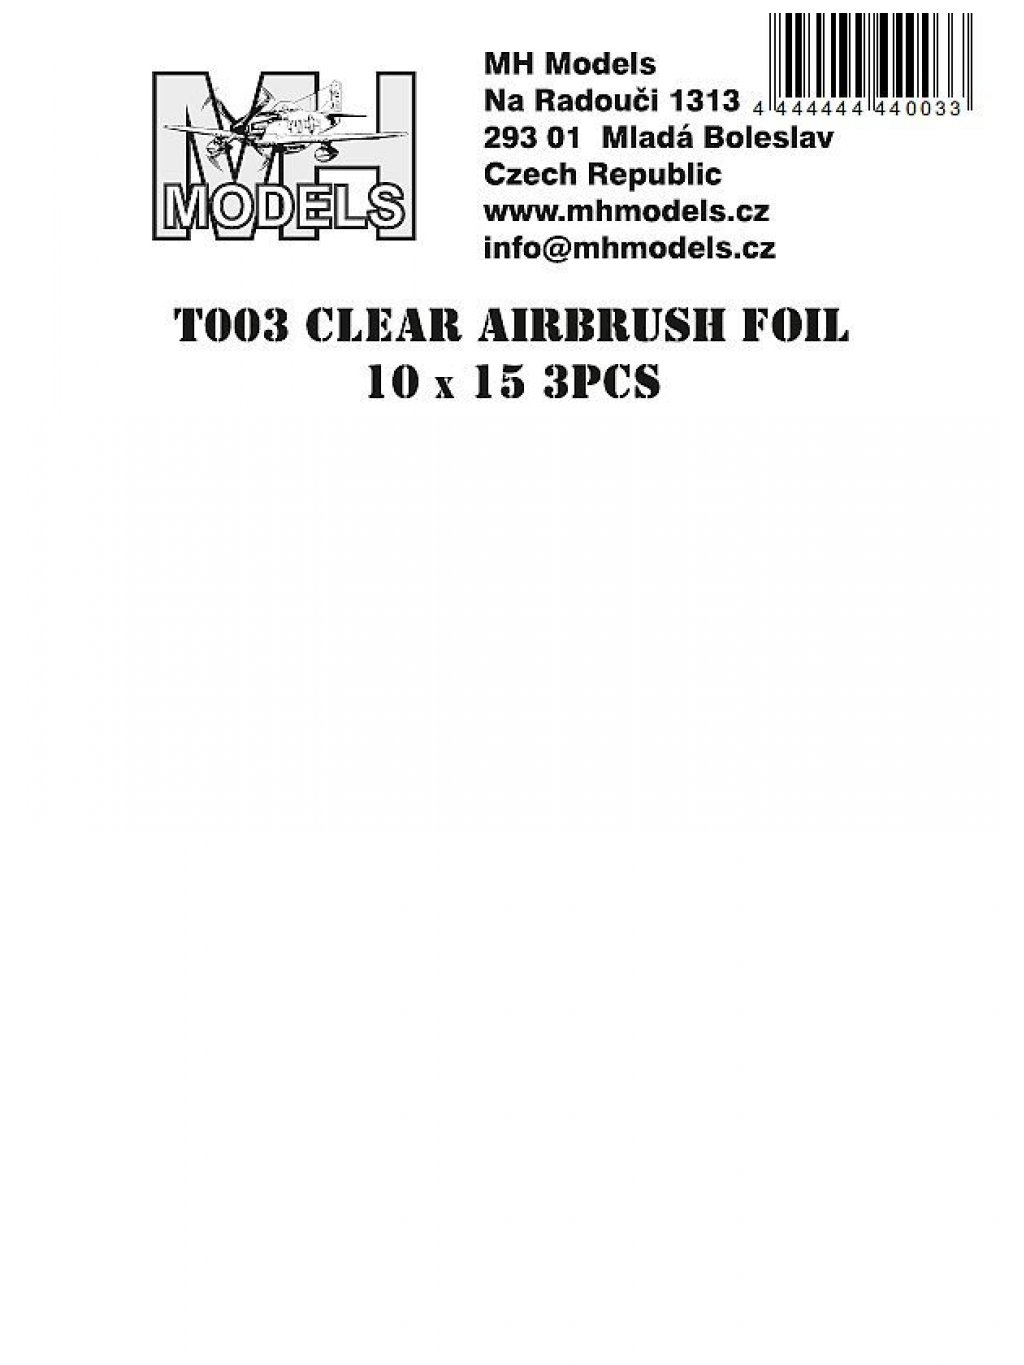 Clear airbrush foil 10X15 3pcs